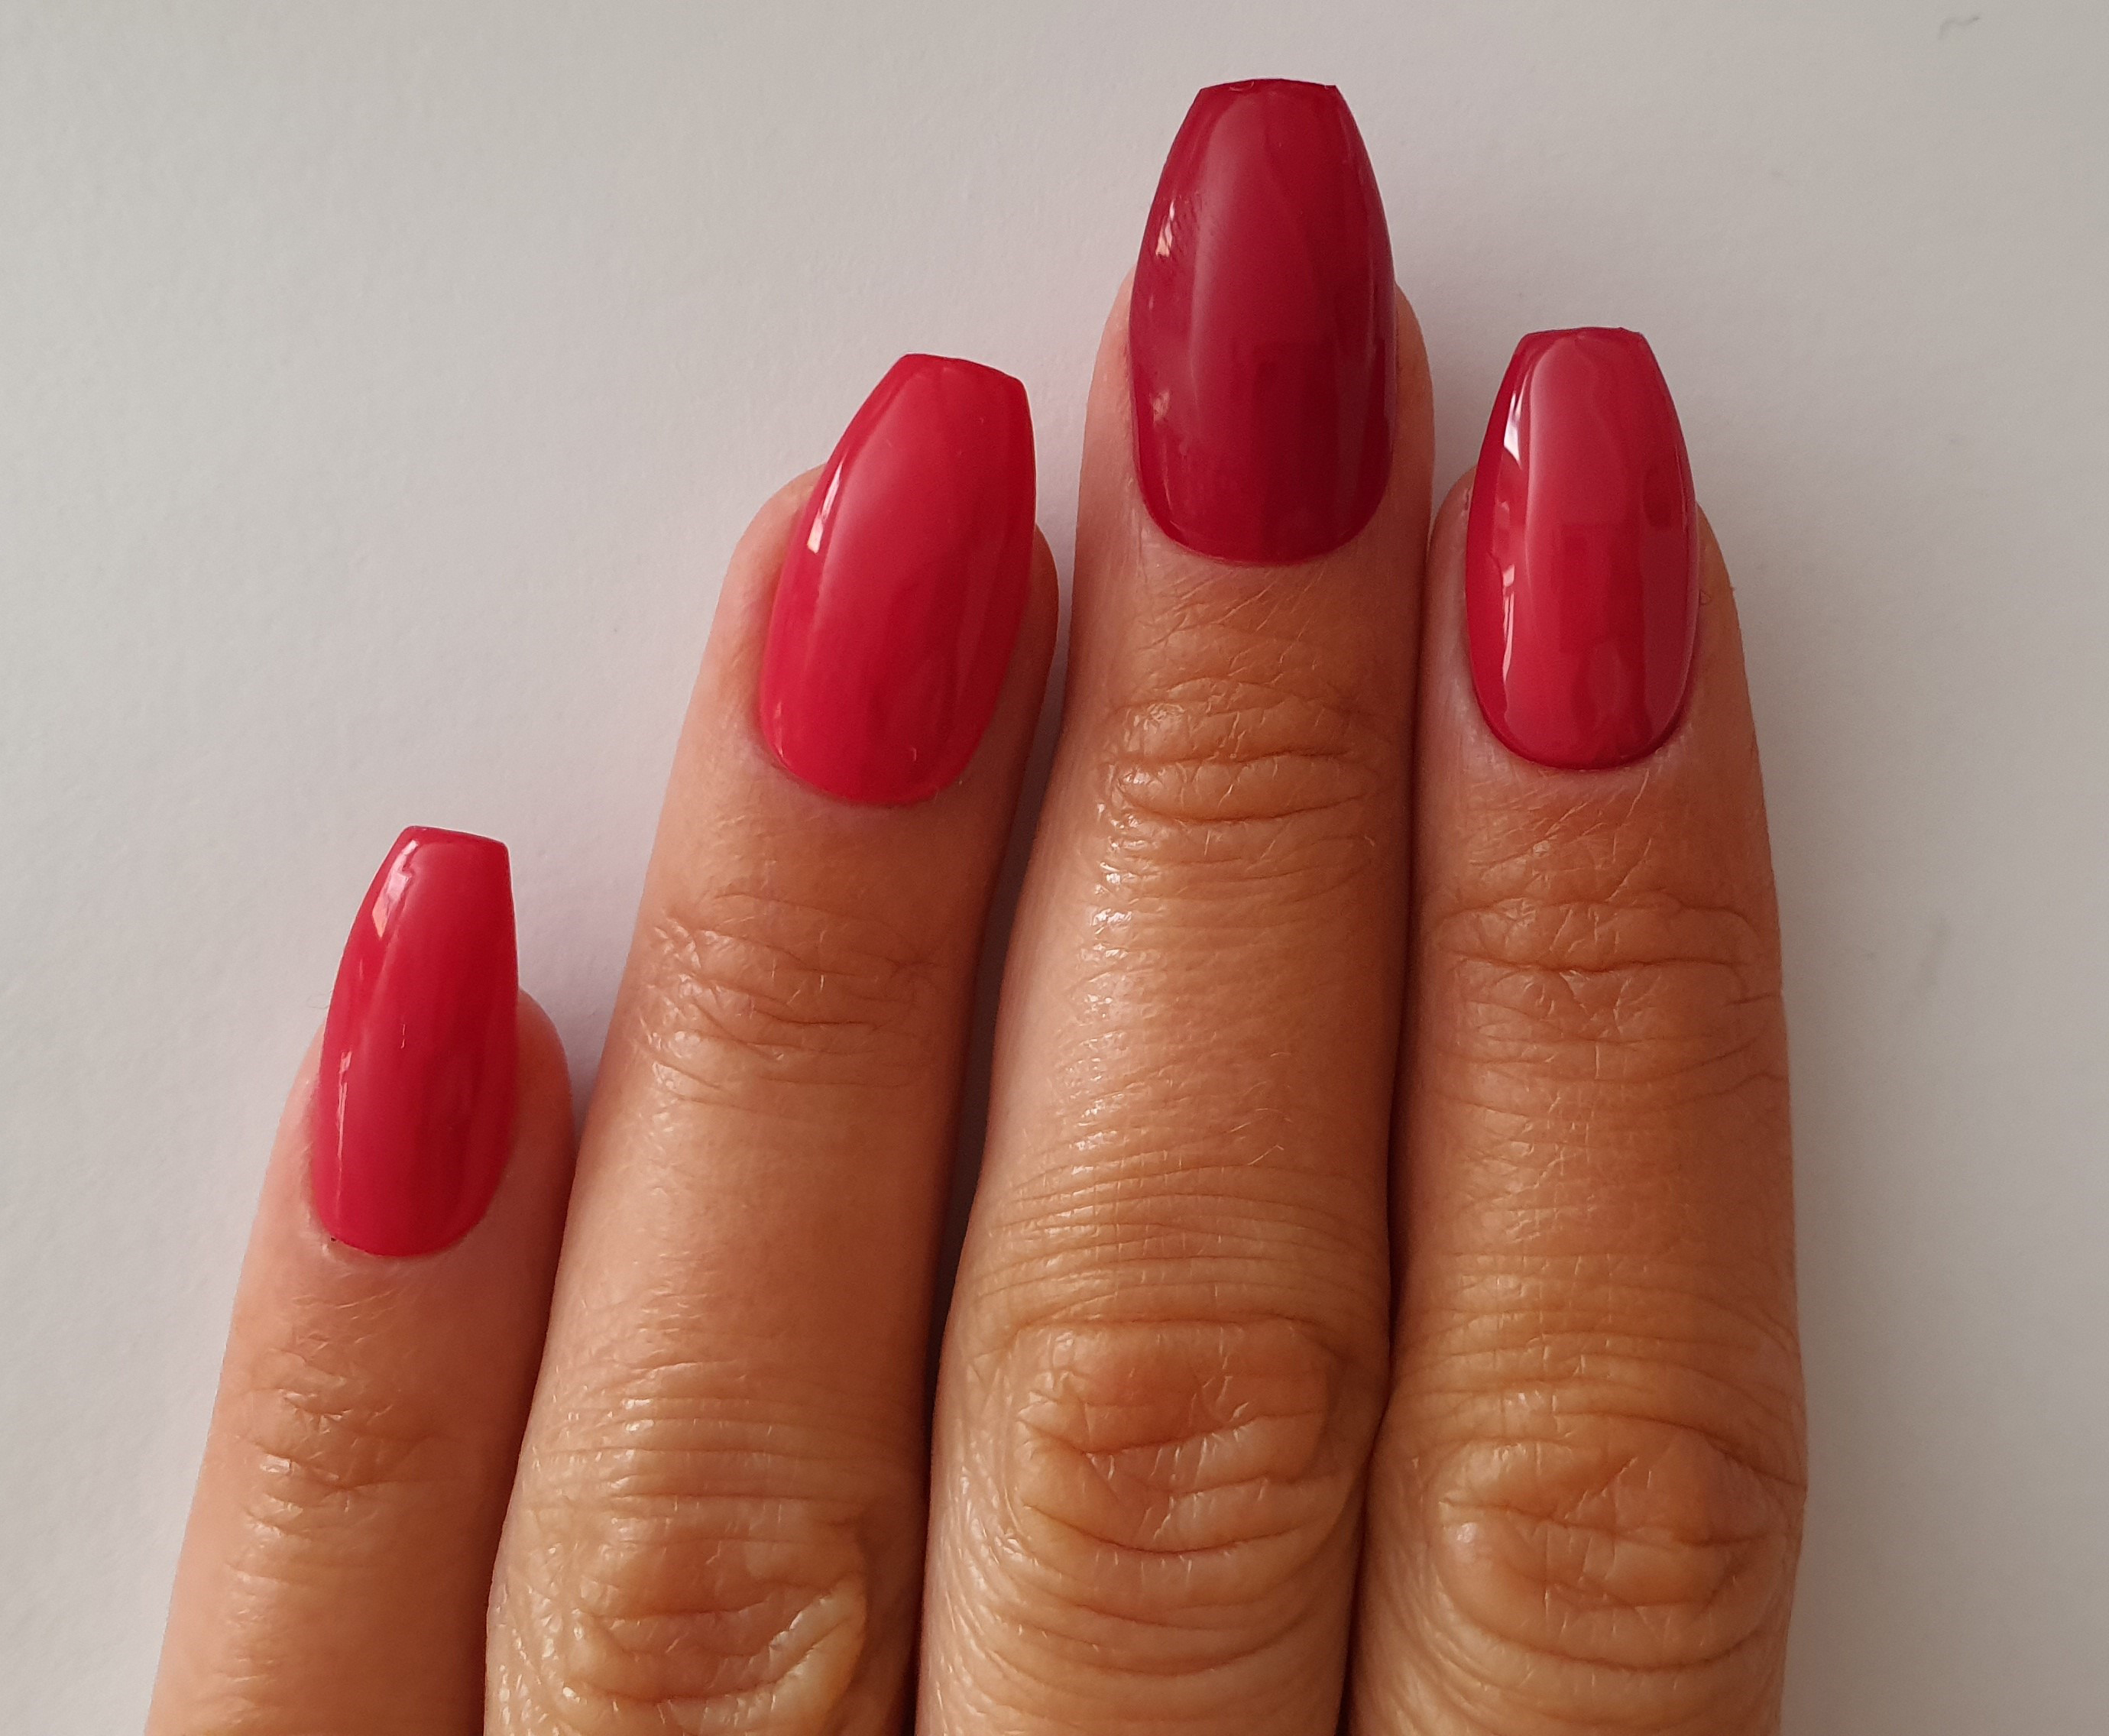 Feel the love with Salon System Nail expert Karen Louise's Valentine's-inspired nail art design.